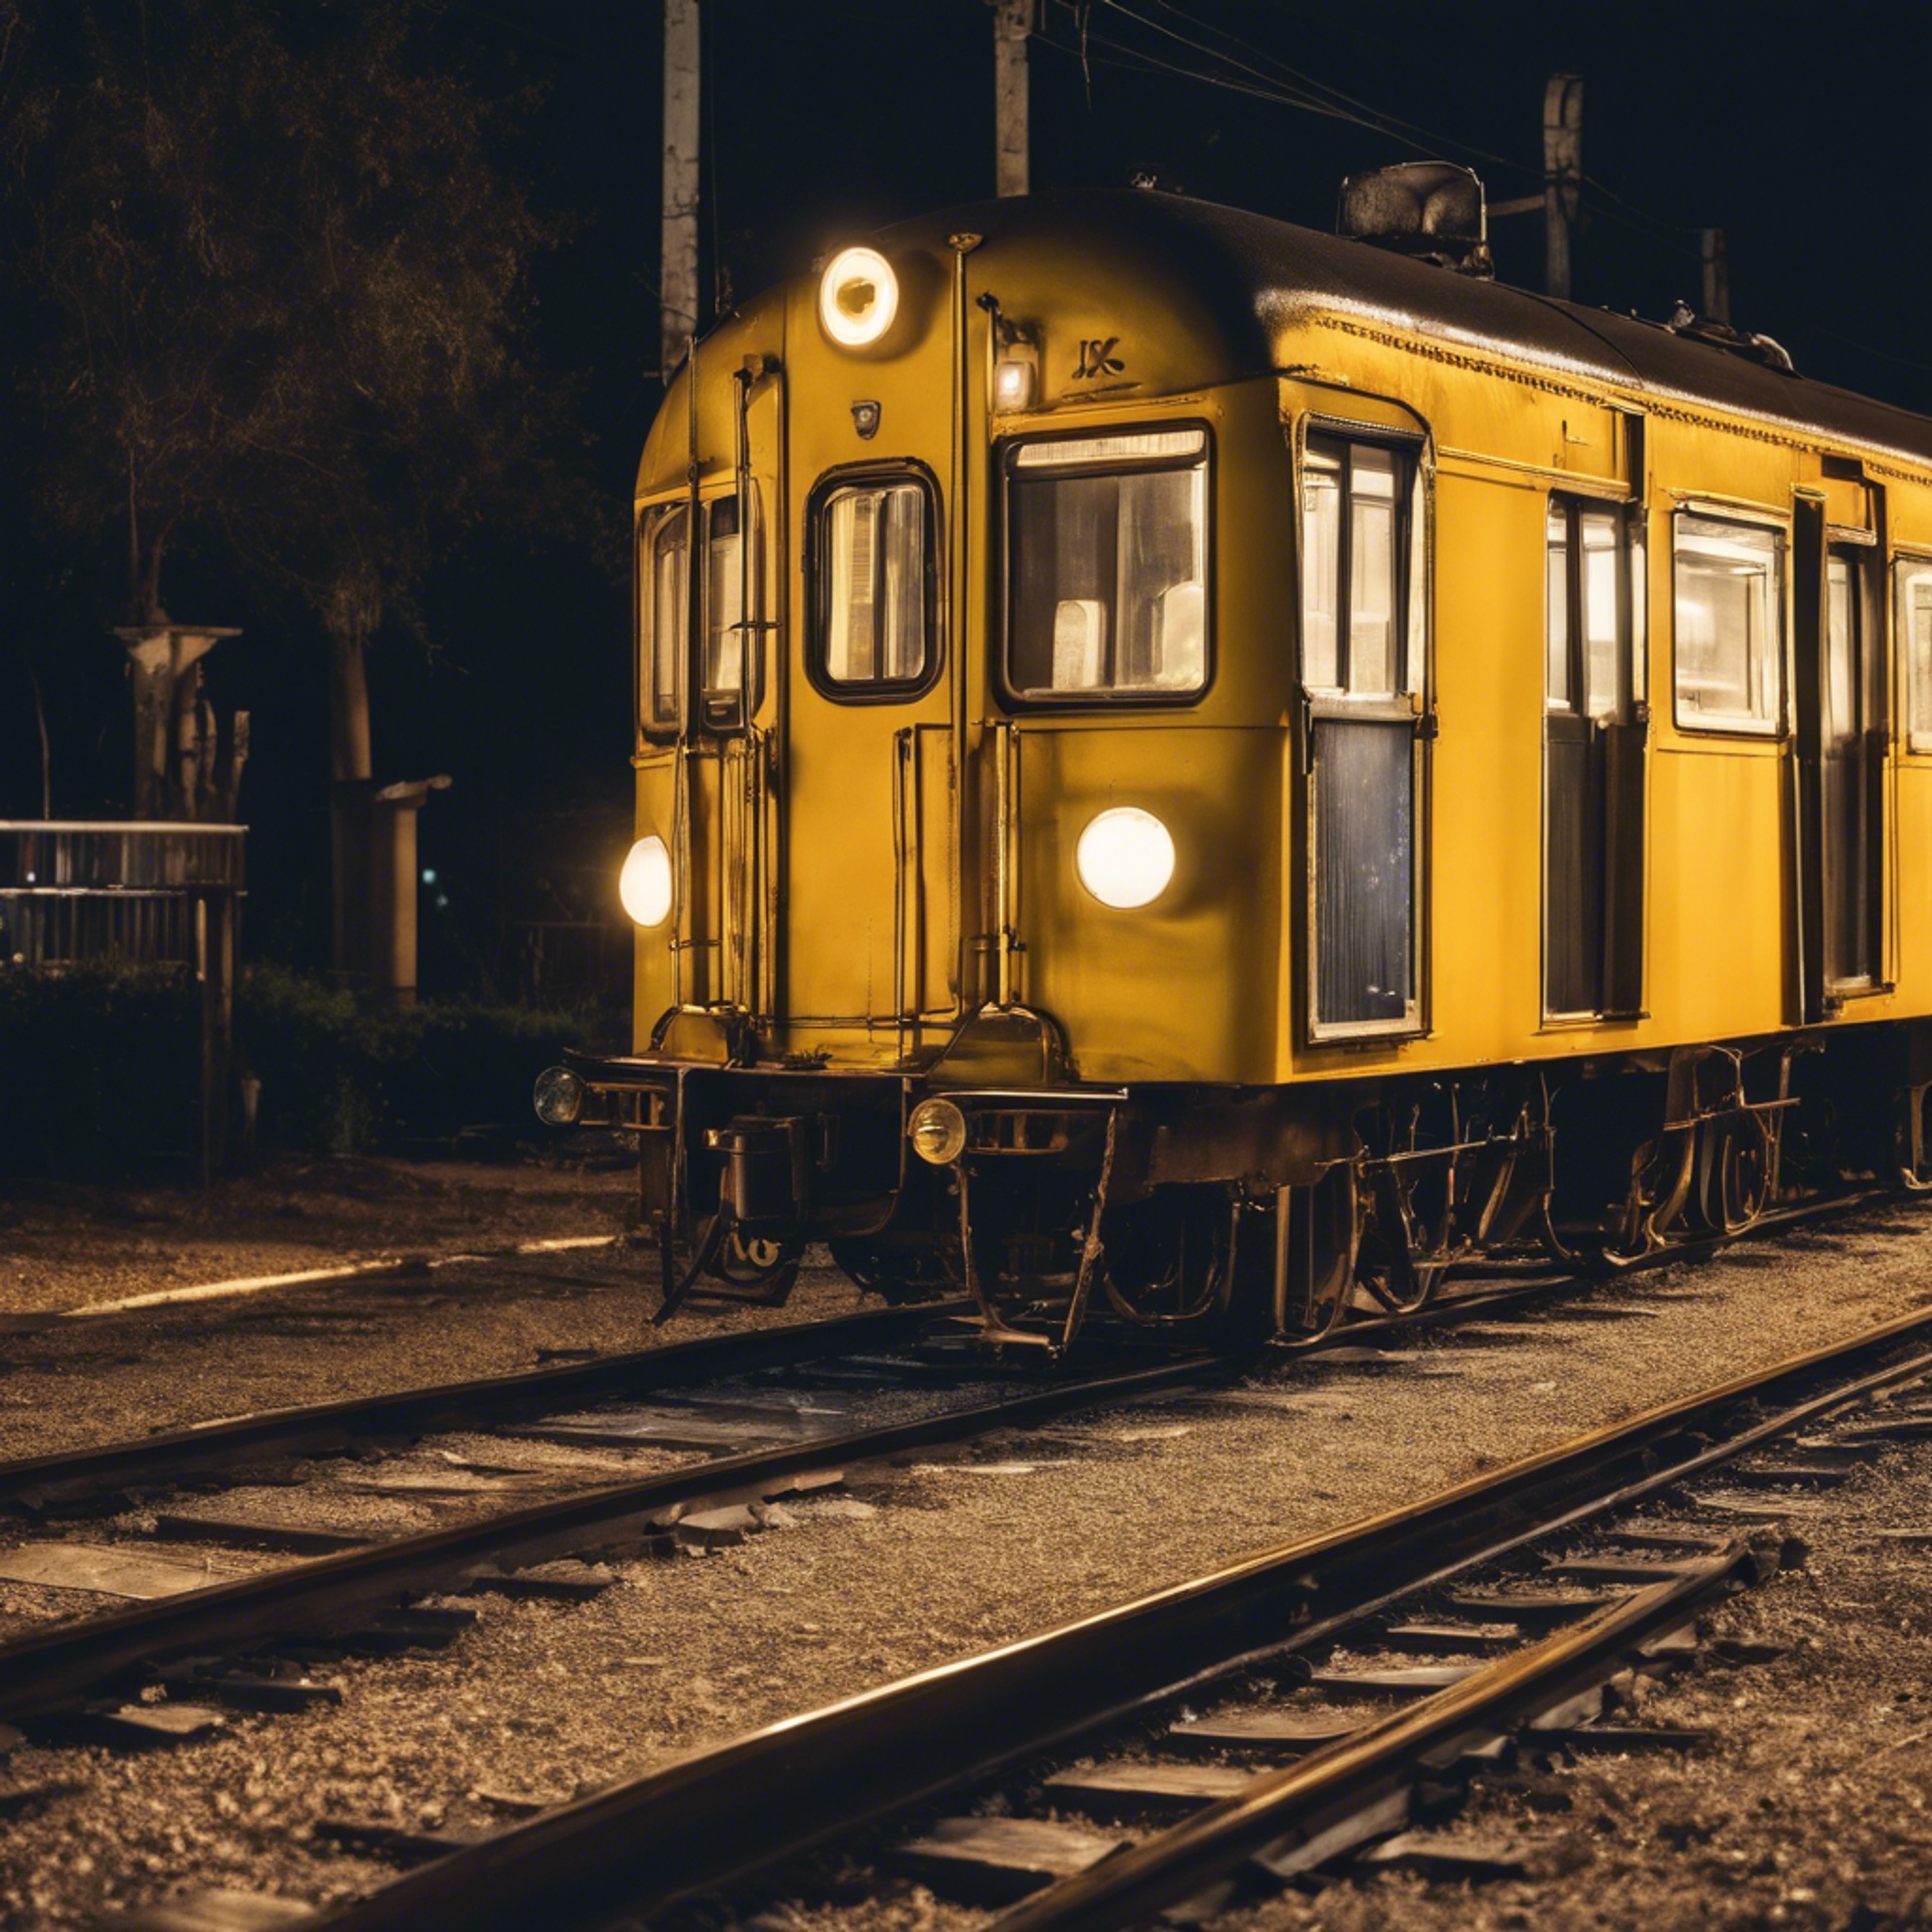 An old train with yellow windows brightly lit, barreling down black tracks at night. Wallpaper[0b0f949586204f2fa460]